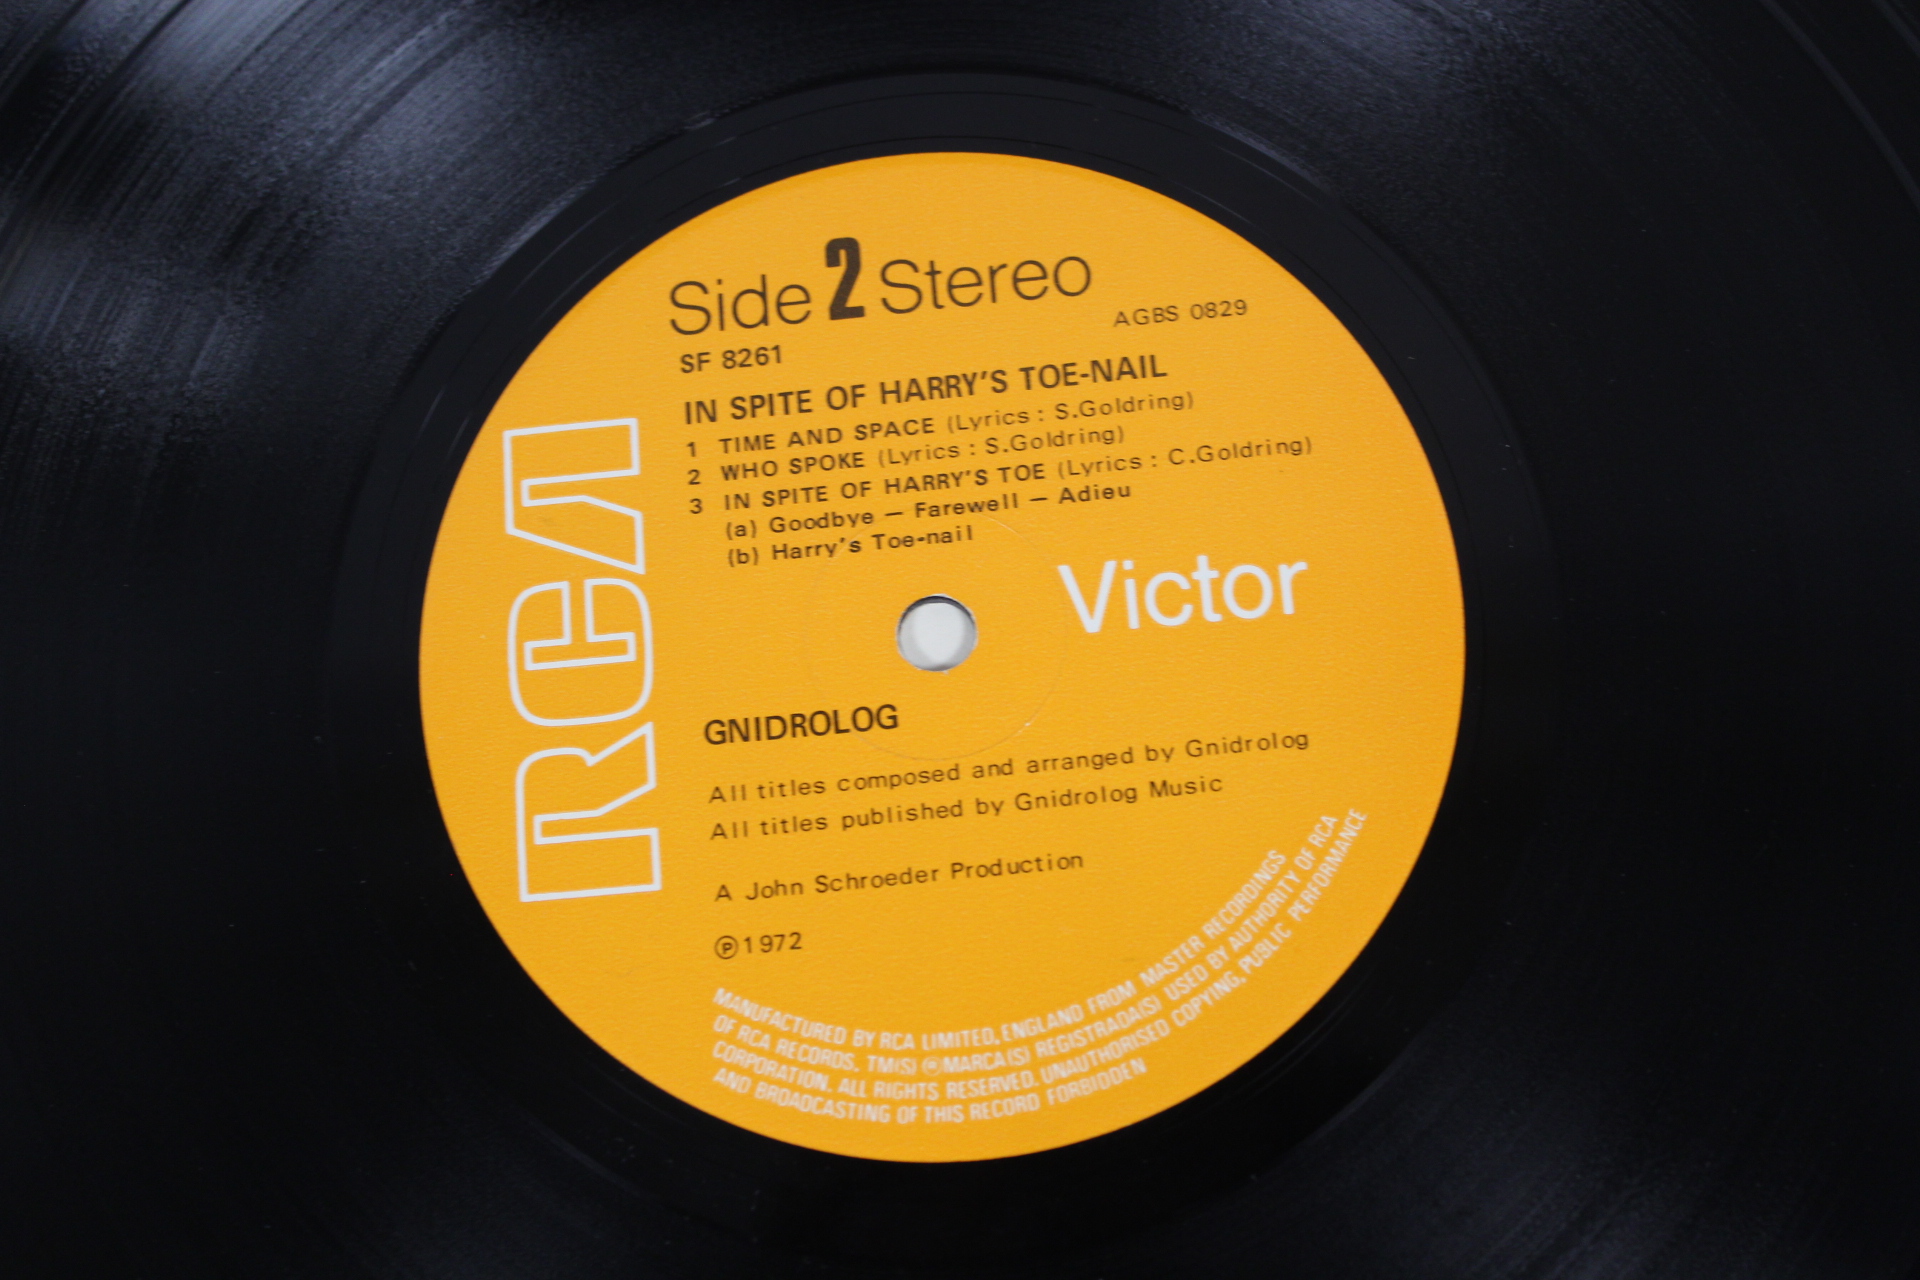 Rock/Pop LPs to include Rod Stewart of swirl Vertigo, Gnidrolog (lattice sleeve), Roy Wood, Hollies, - Image 4 of 11